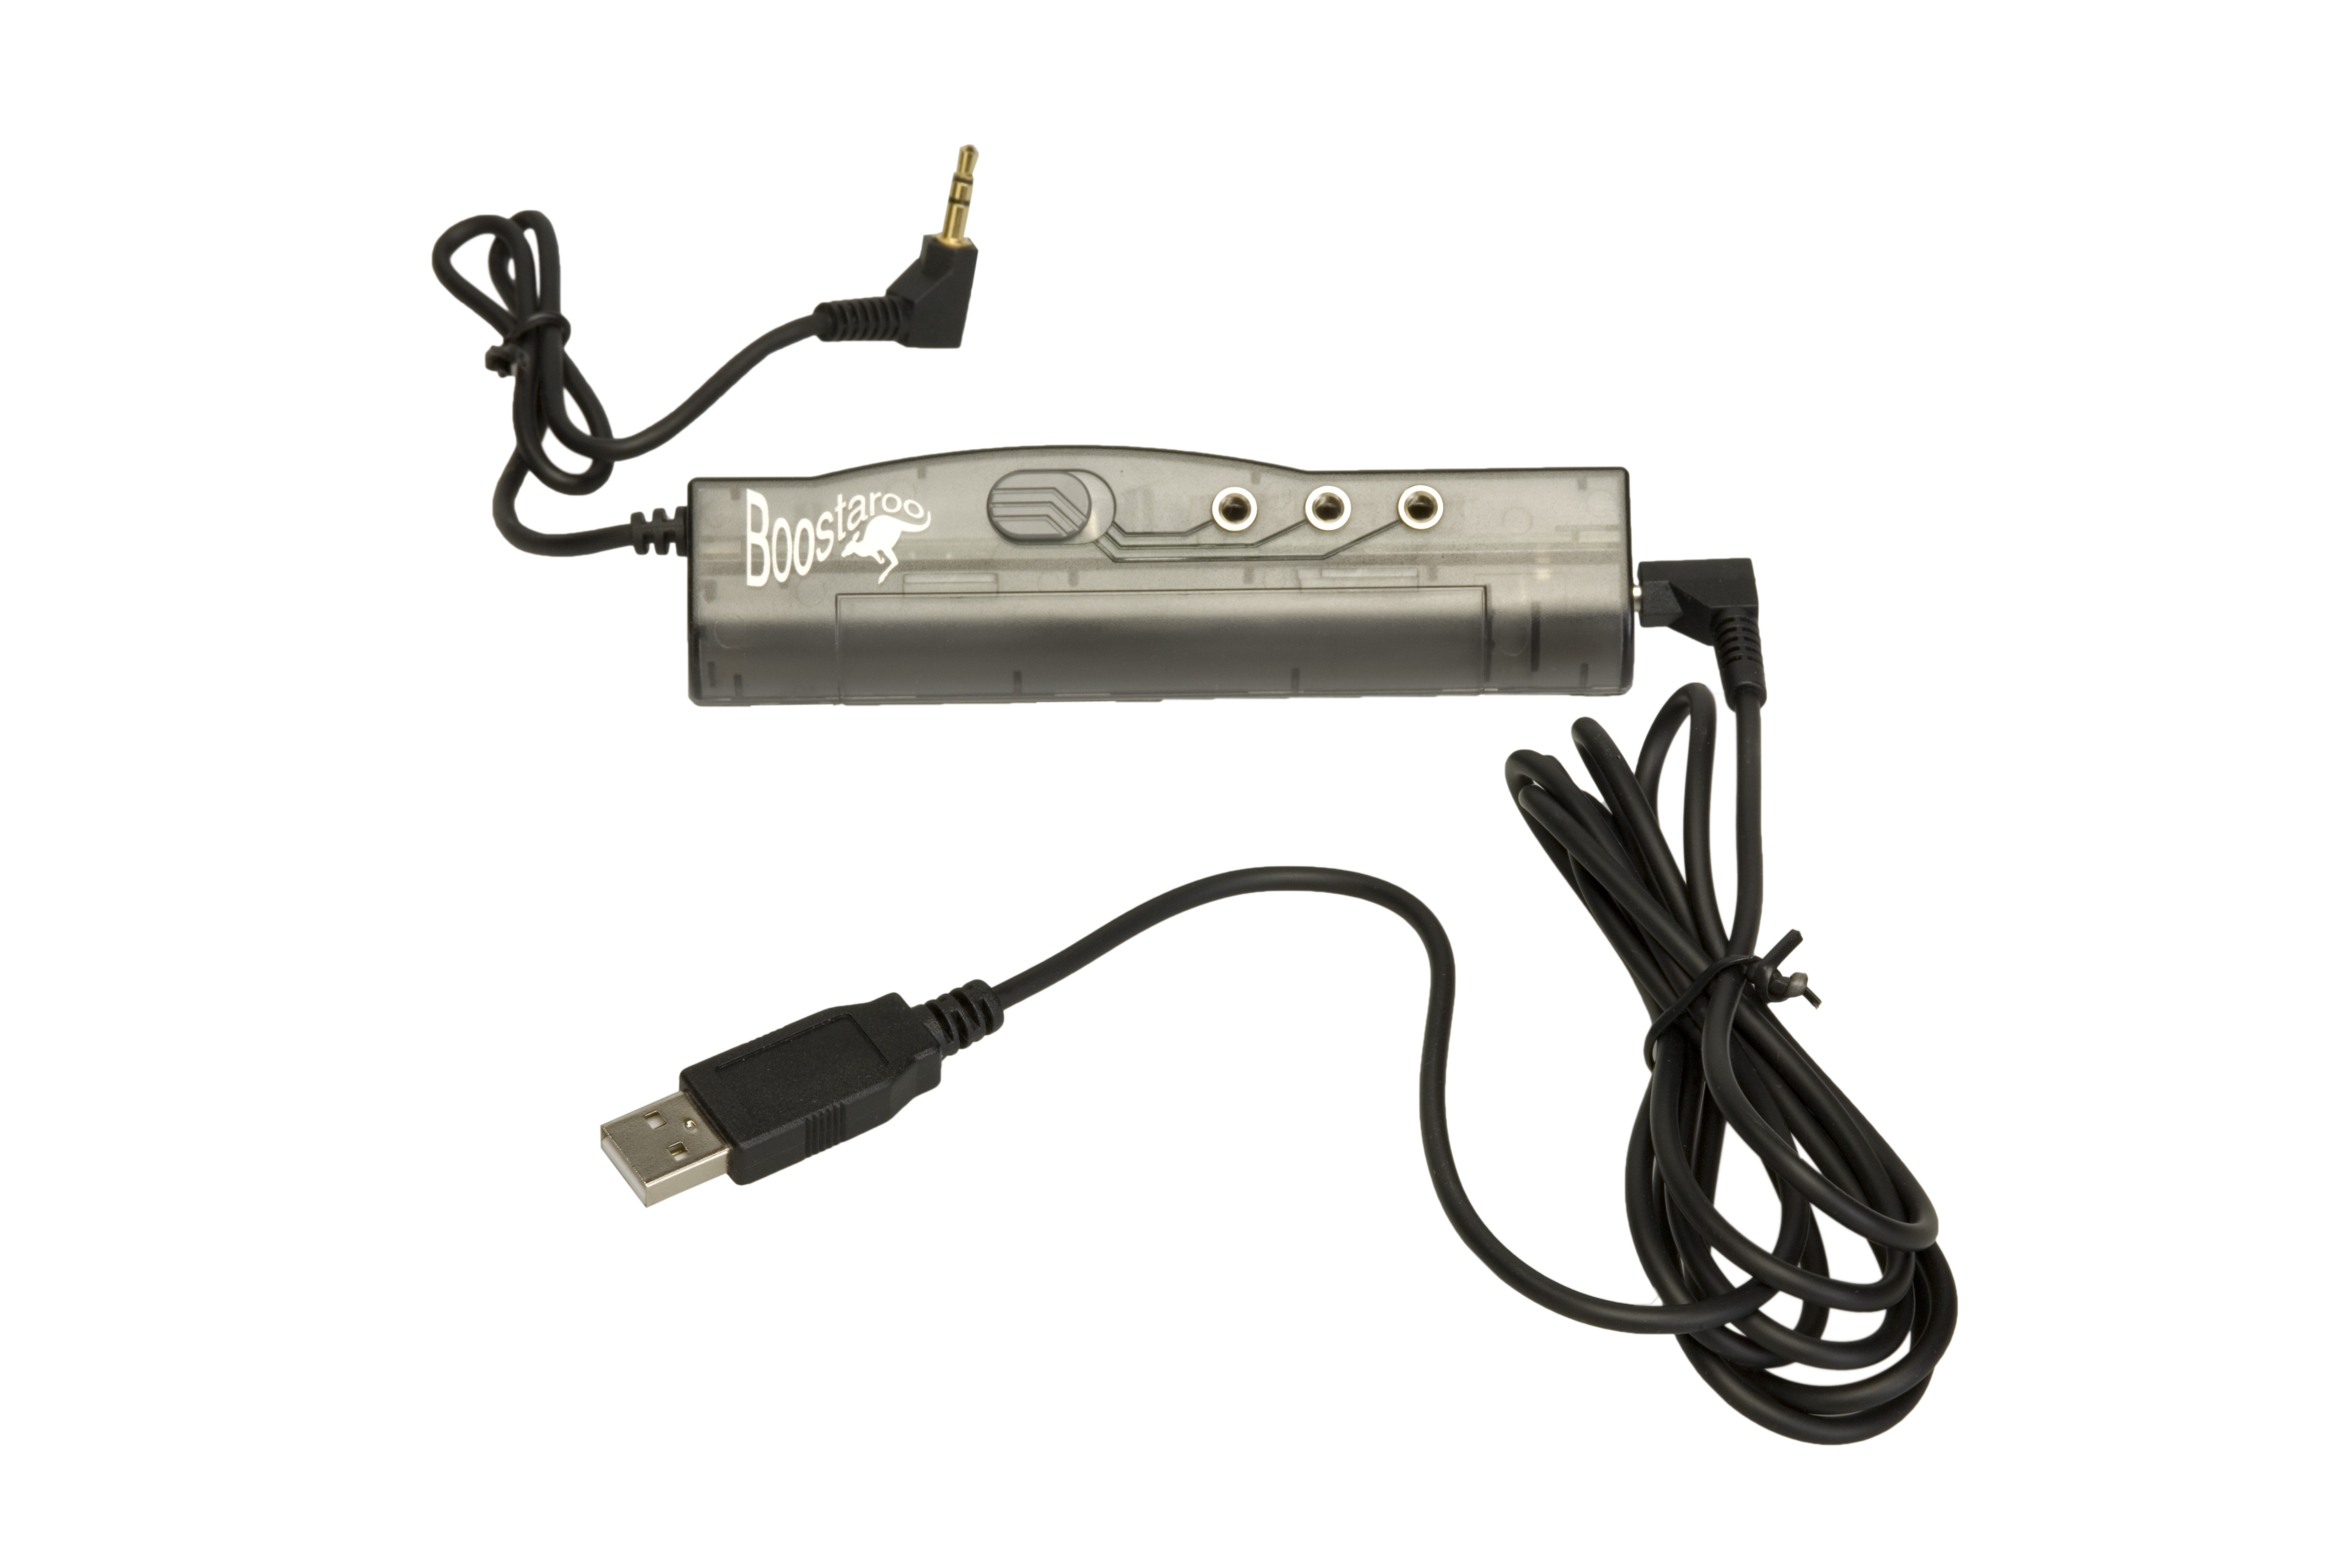 Battery/USB Powered Boostaroo Audio Amplifier and Splitter